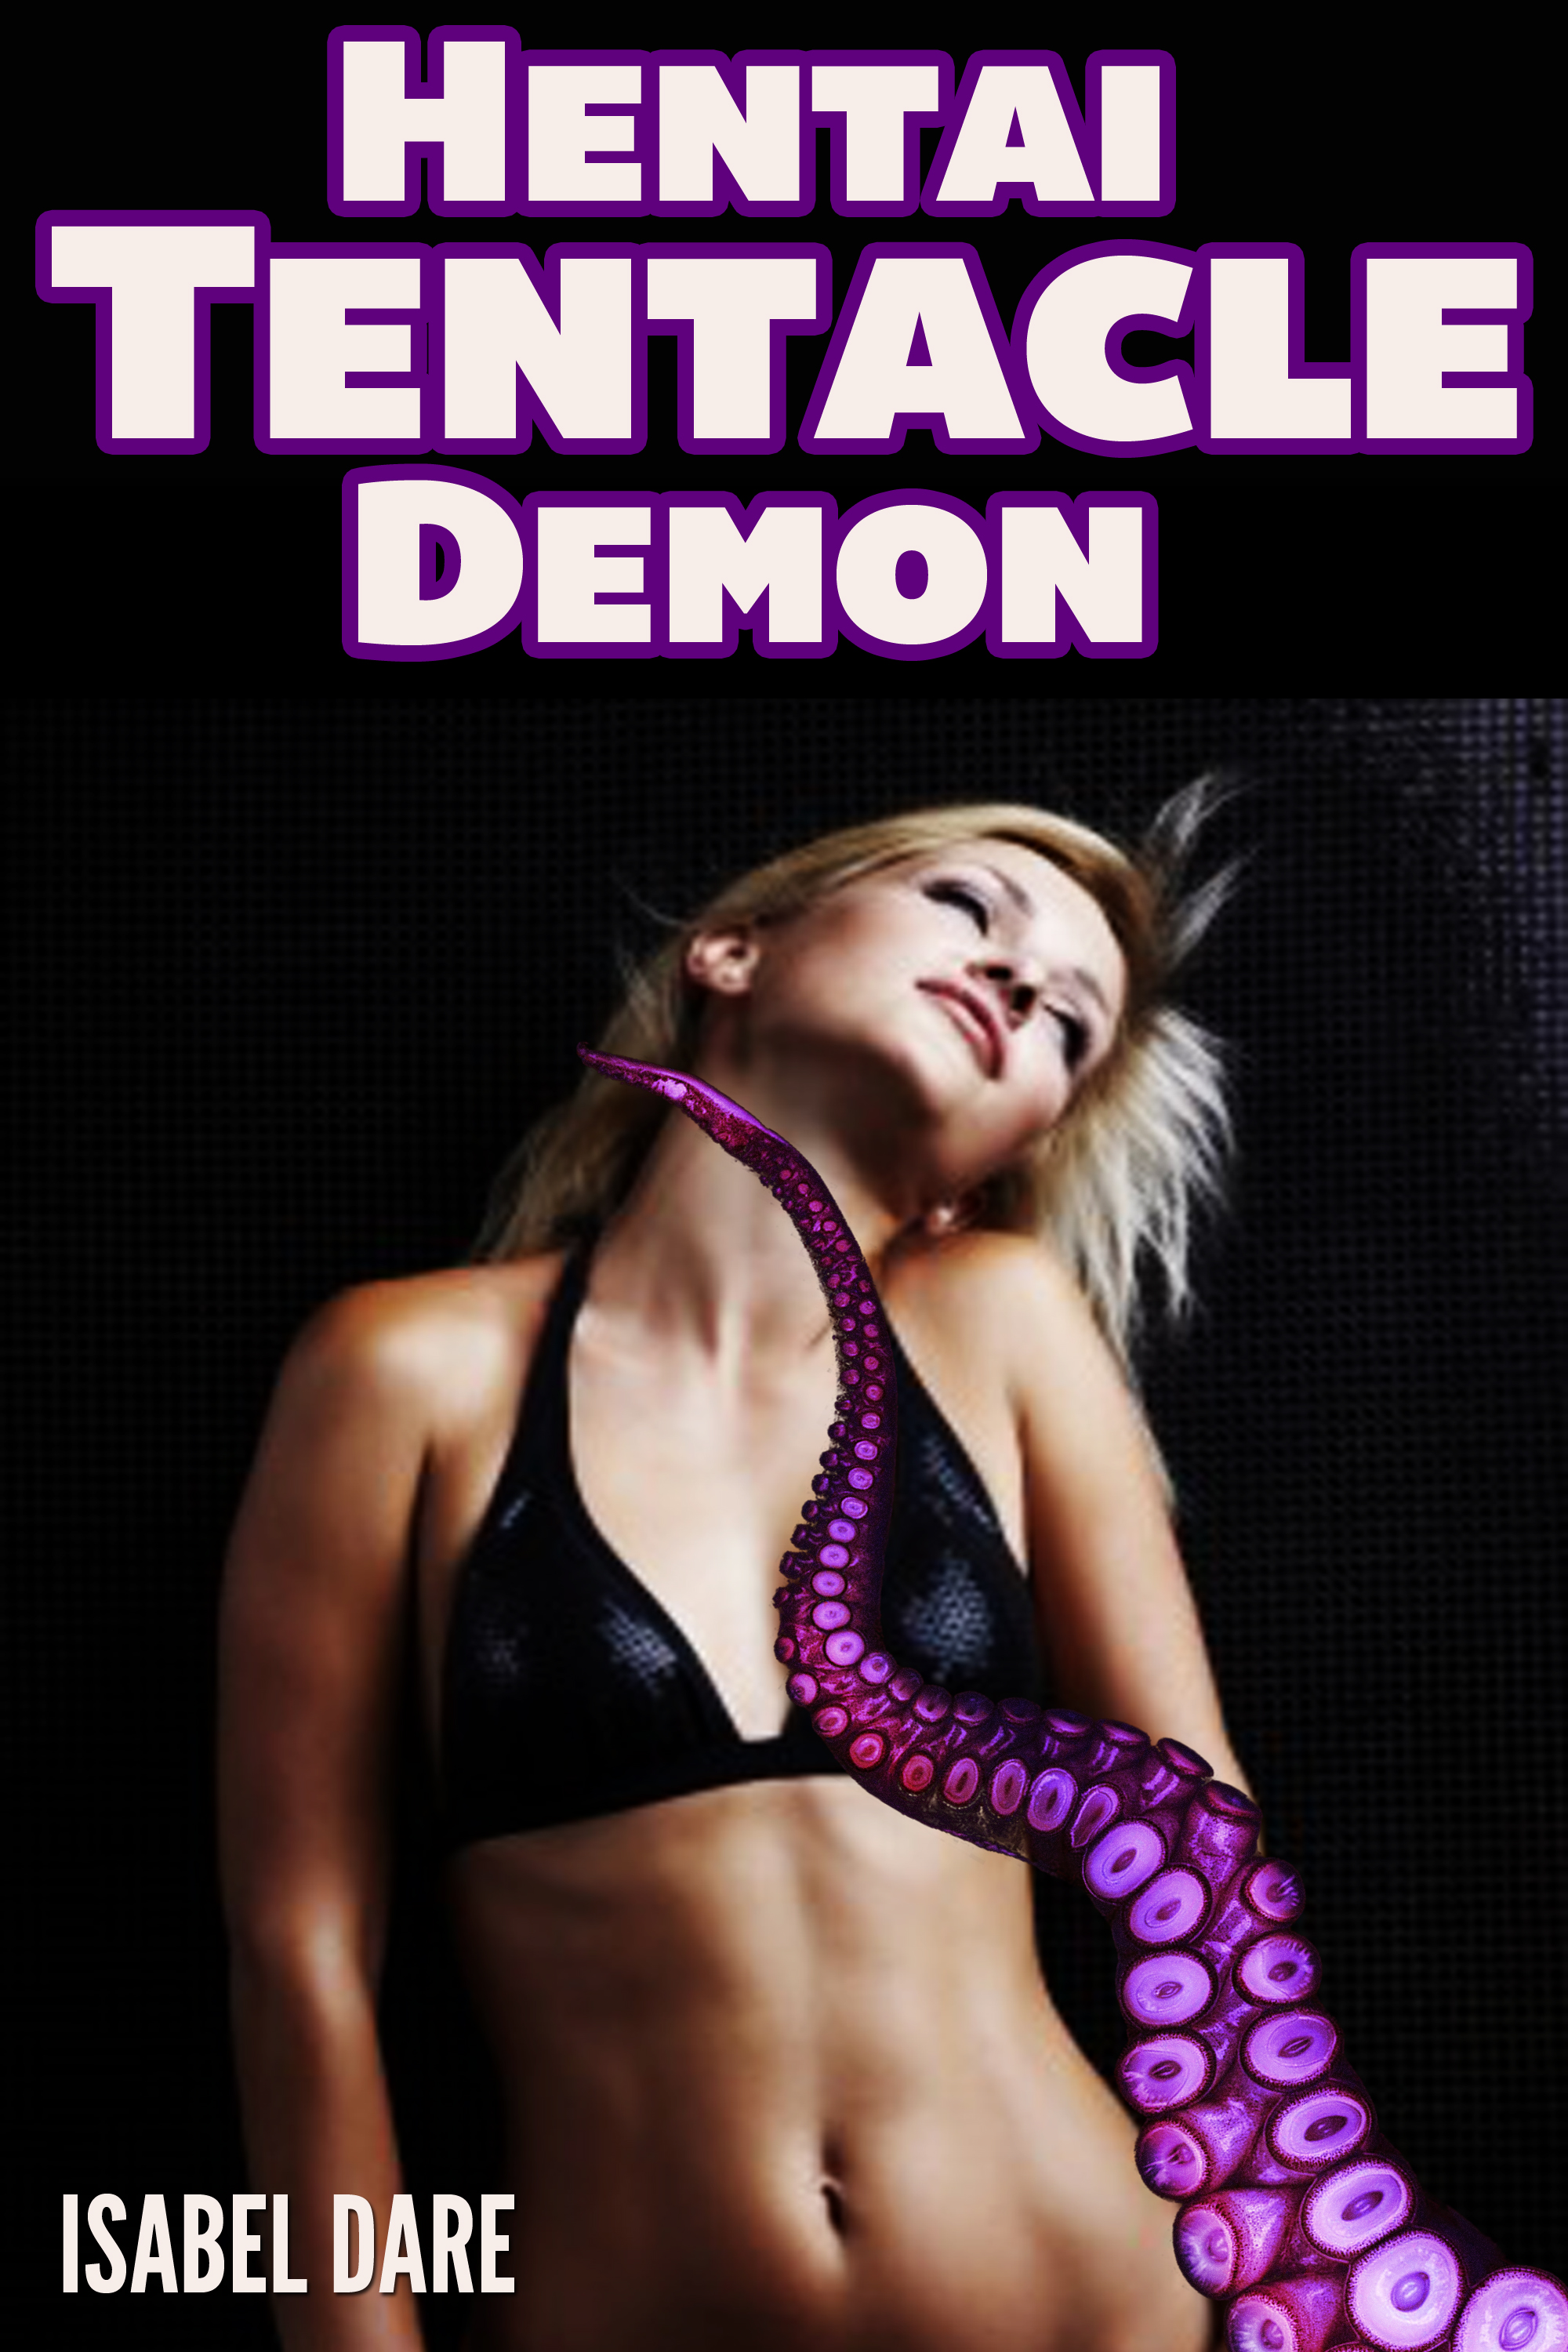 Porn Tentacle Monster - Hentai Tentacle Demon (Tentacle Monster Erotica), an Ebook by Isabel Dare